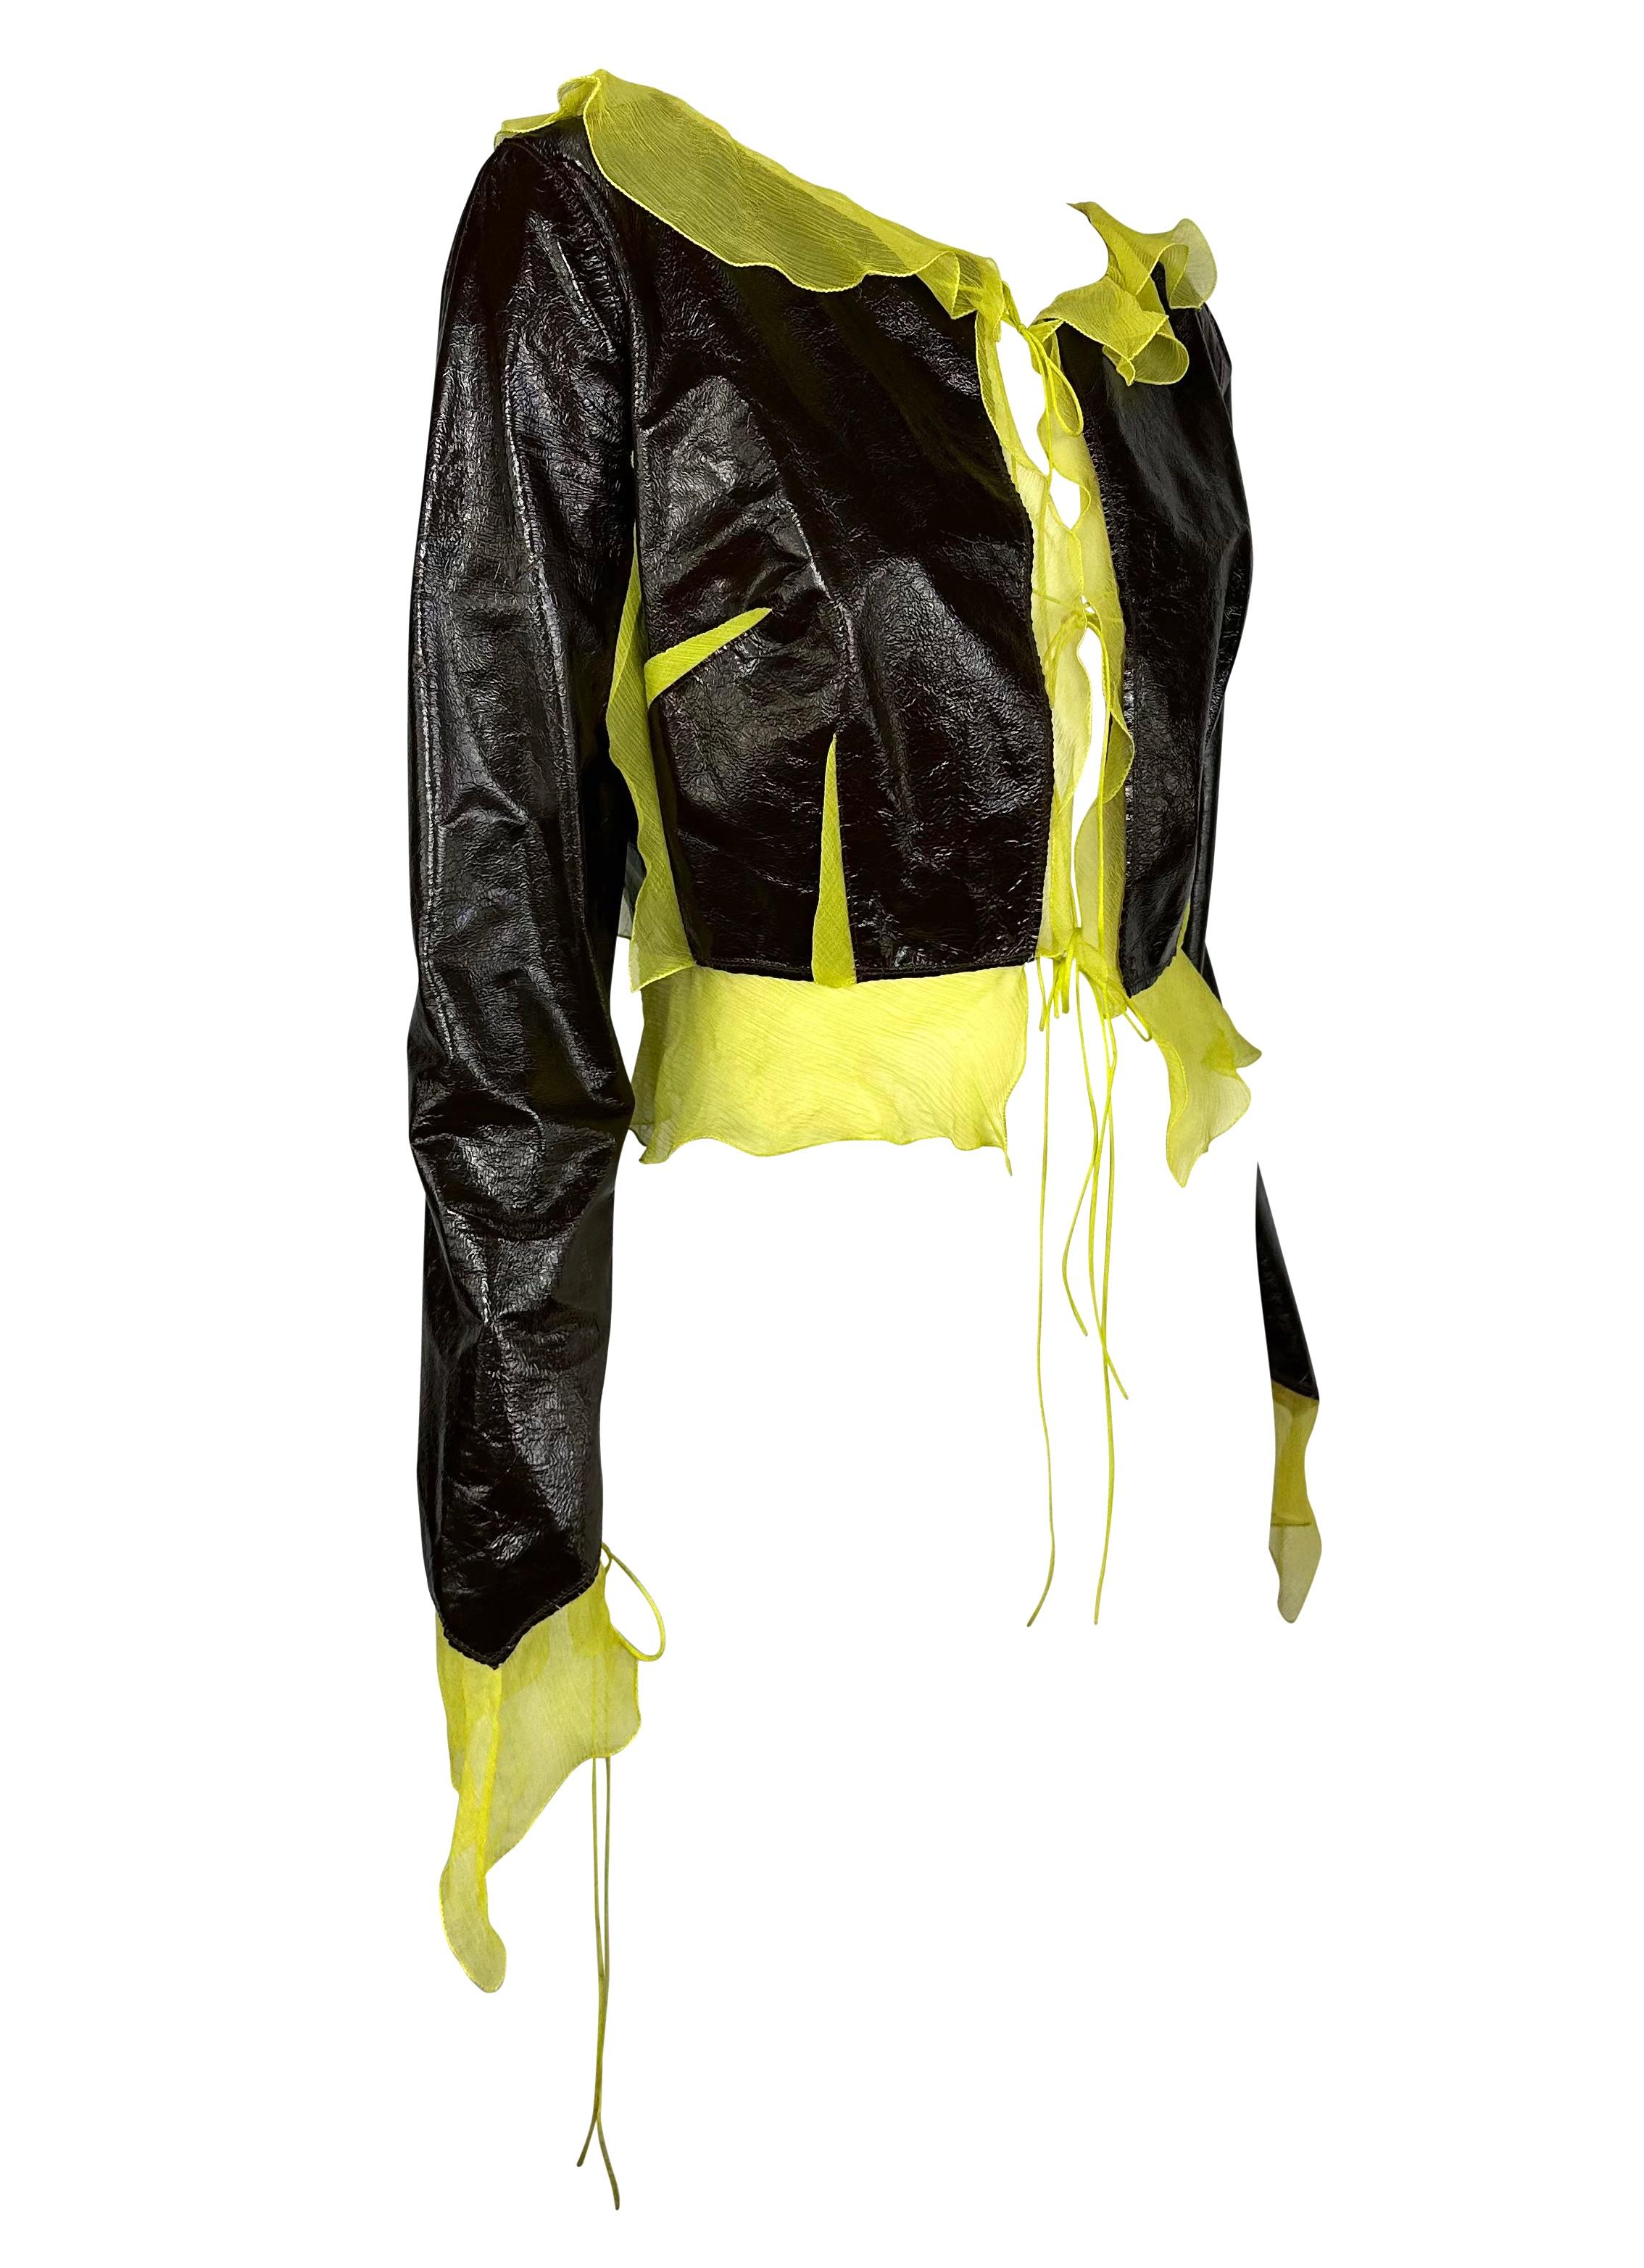 S/S 2000 Fendi by Karl Lagerfeld Ad Patent Leather Lime Silk Chiffon Jacket 1